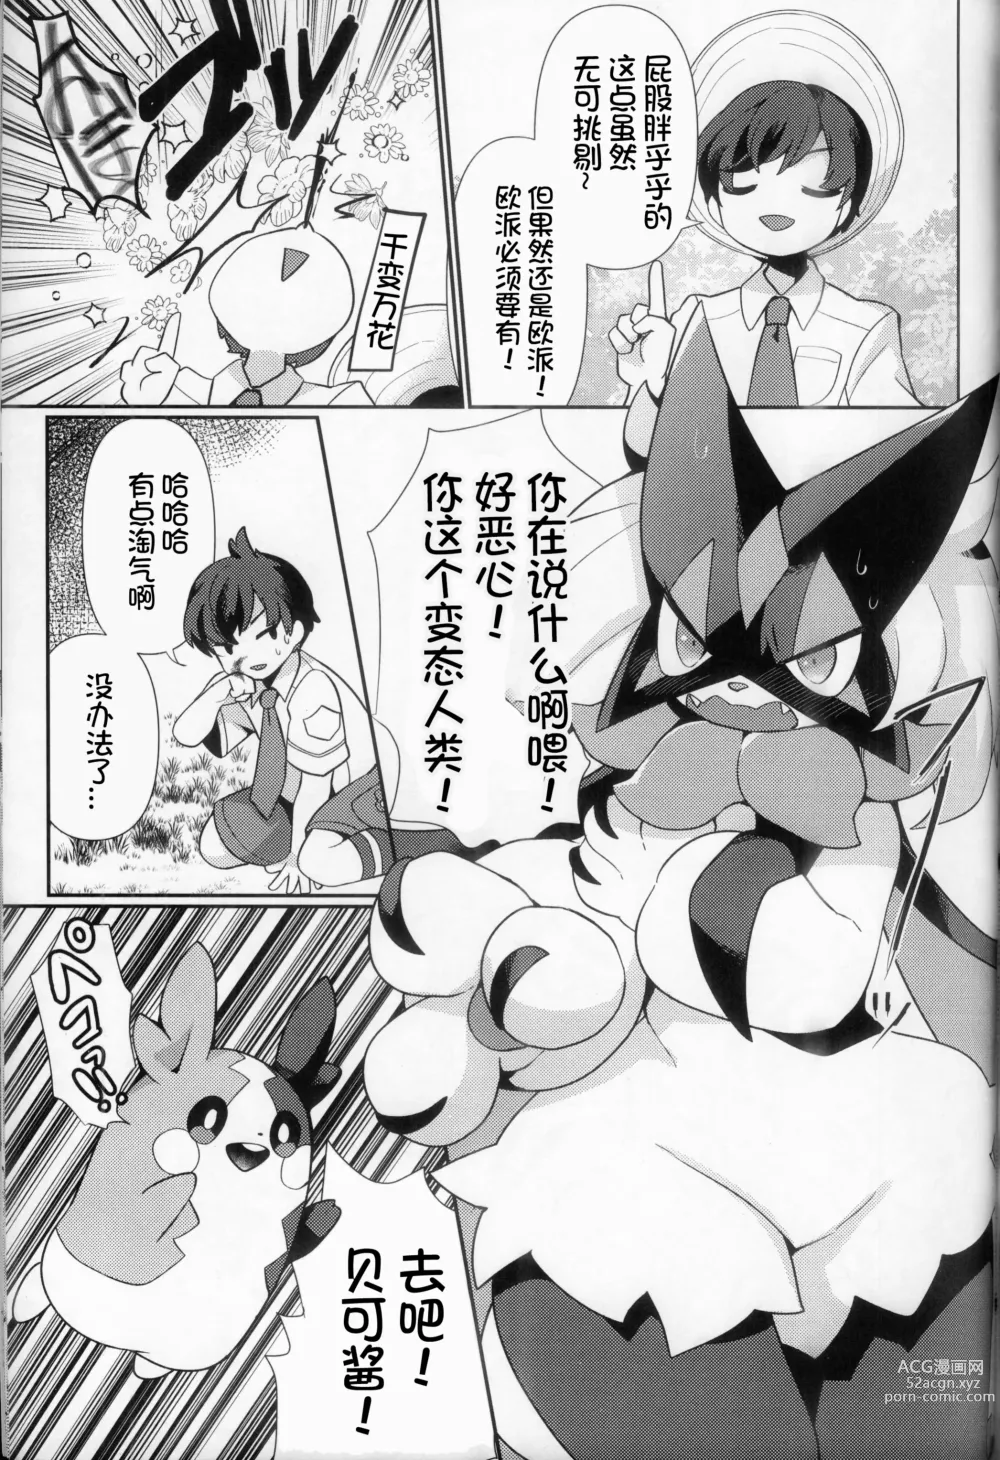 Page 5 of doujinshi Morumori! Sakarupeko!!